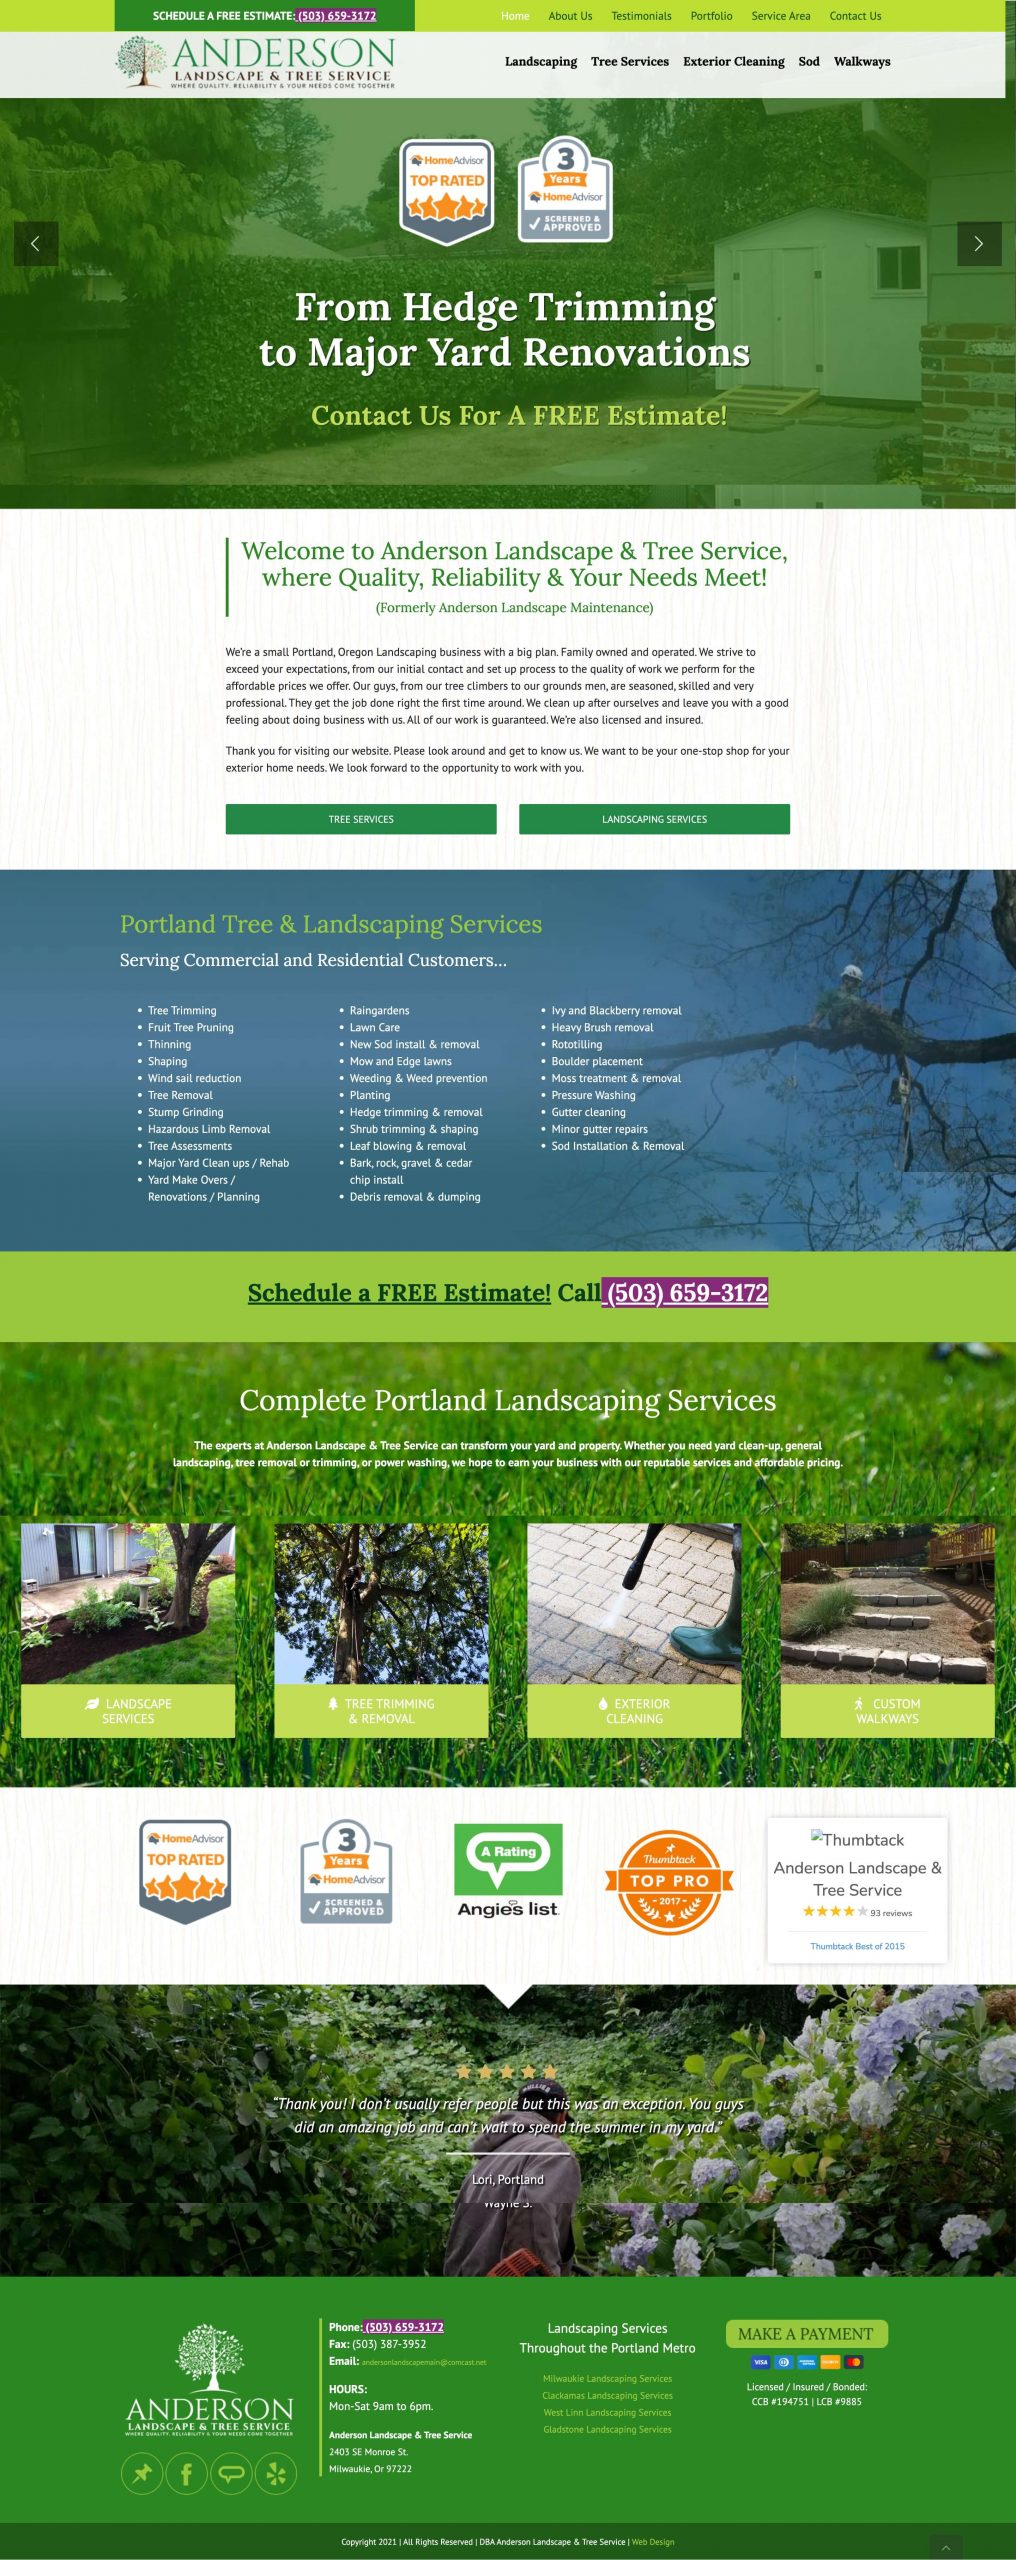 Anderson Landscape & Tree Service